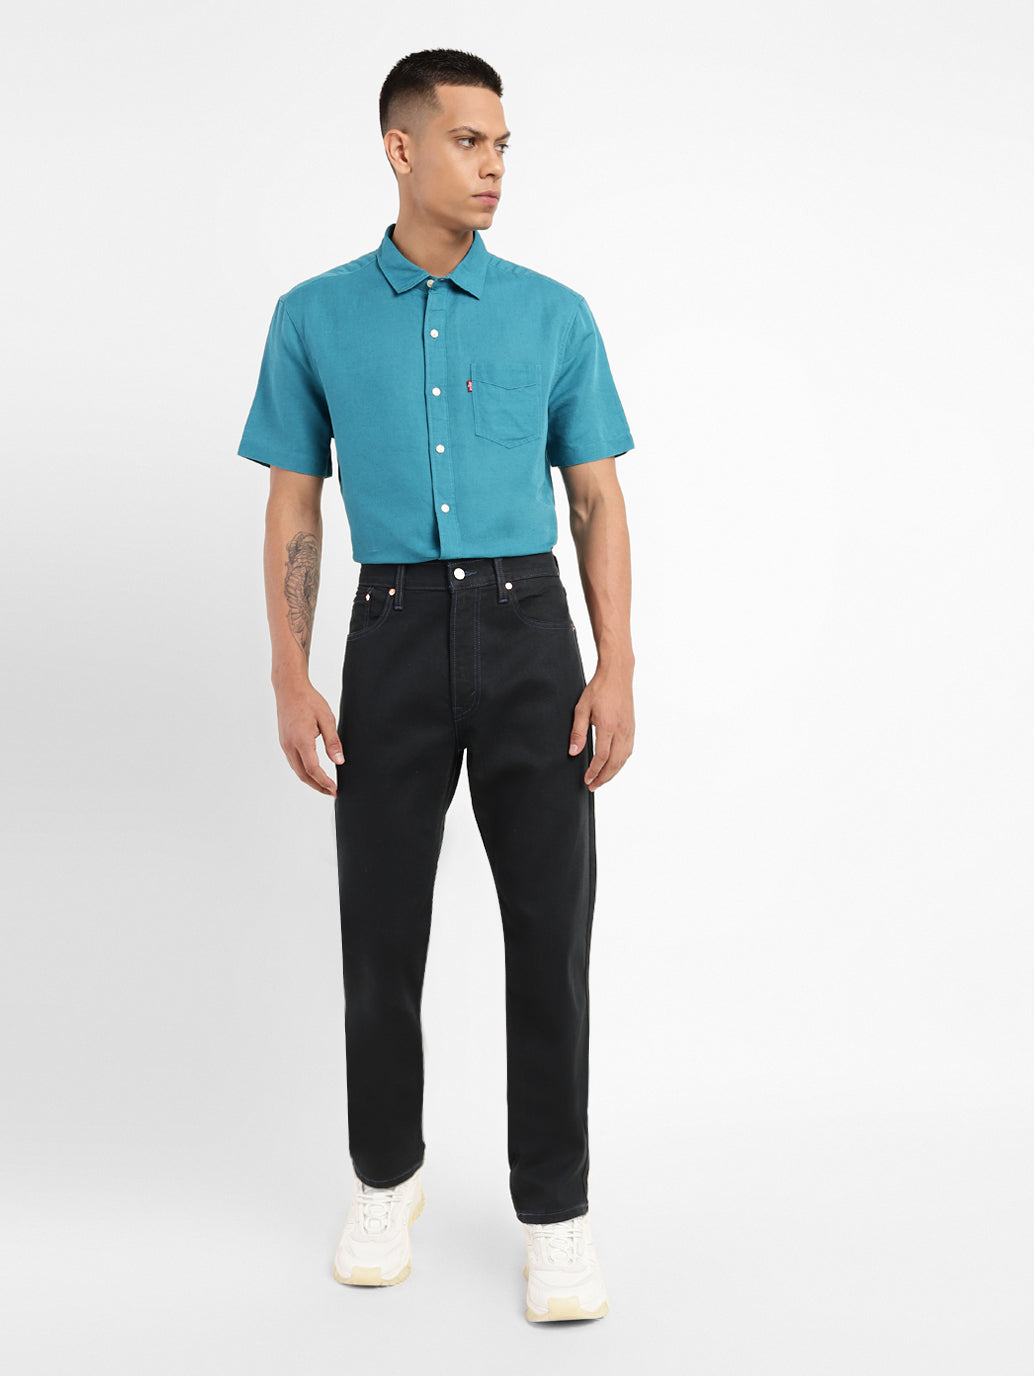 Essentials Men's Regular-Fit Short-Sleeve Crewneck Pocket T-Shirt,  Pack of 2